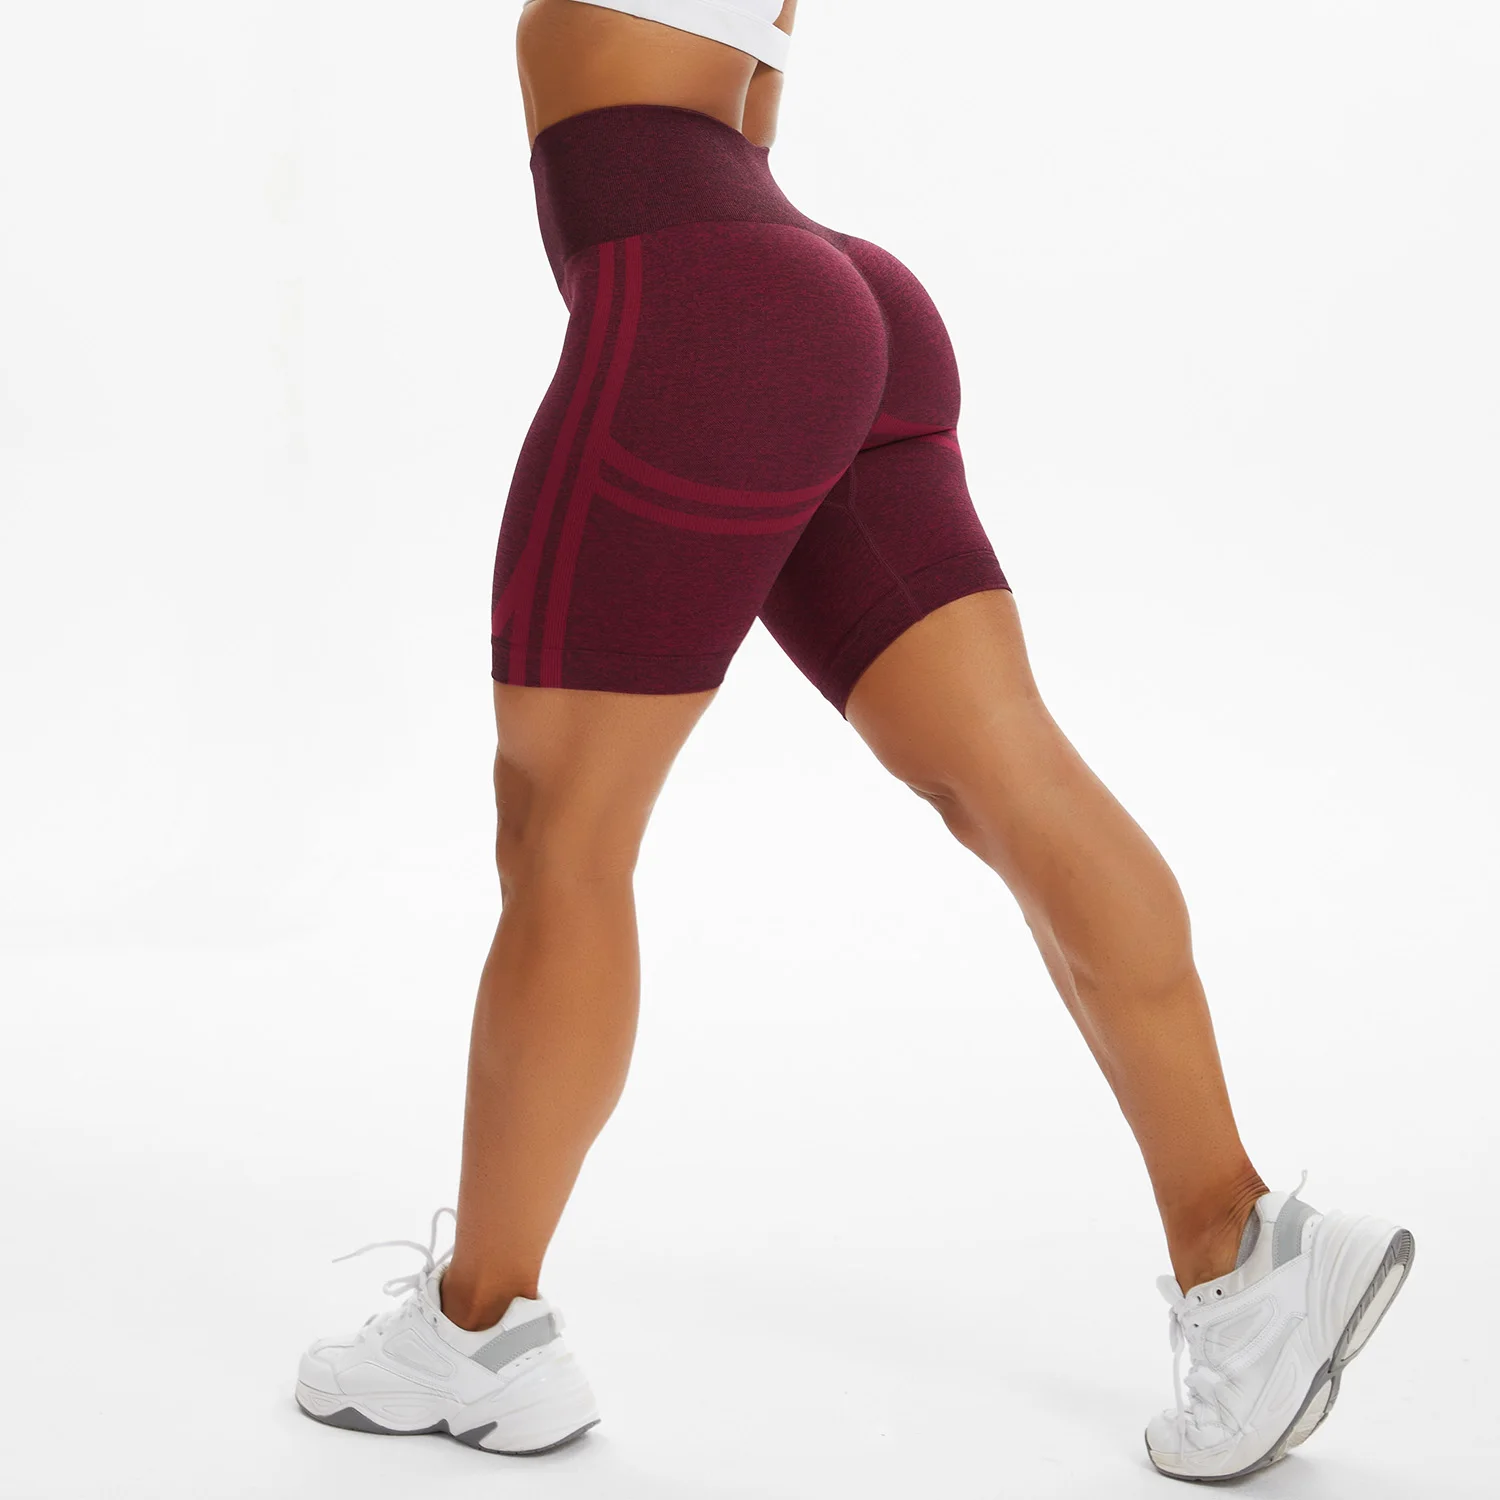 Seamless Sports Shorts For Women Hip Push Up Short High Waist Leggings Gym Yoga Hot Shorts Tummy Control Workout Fitness Shorts